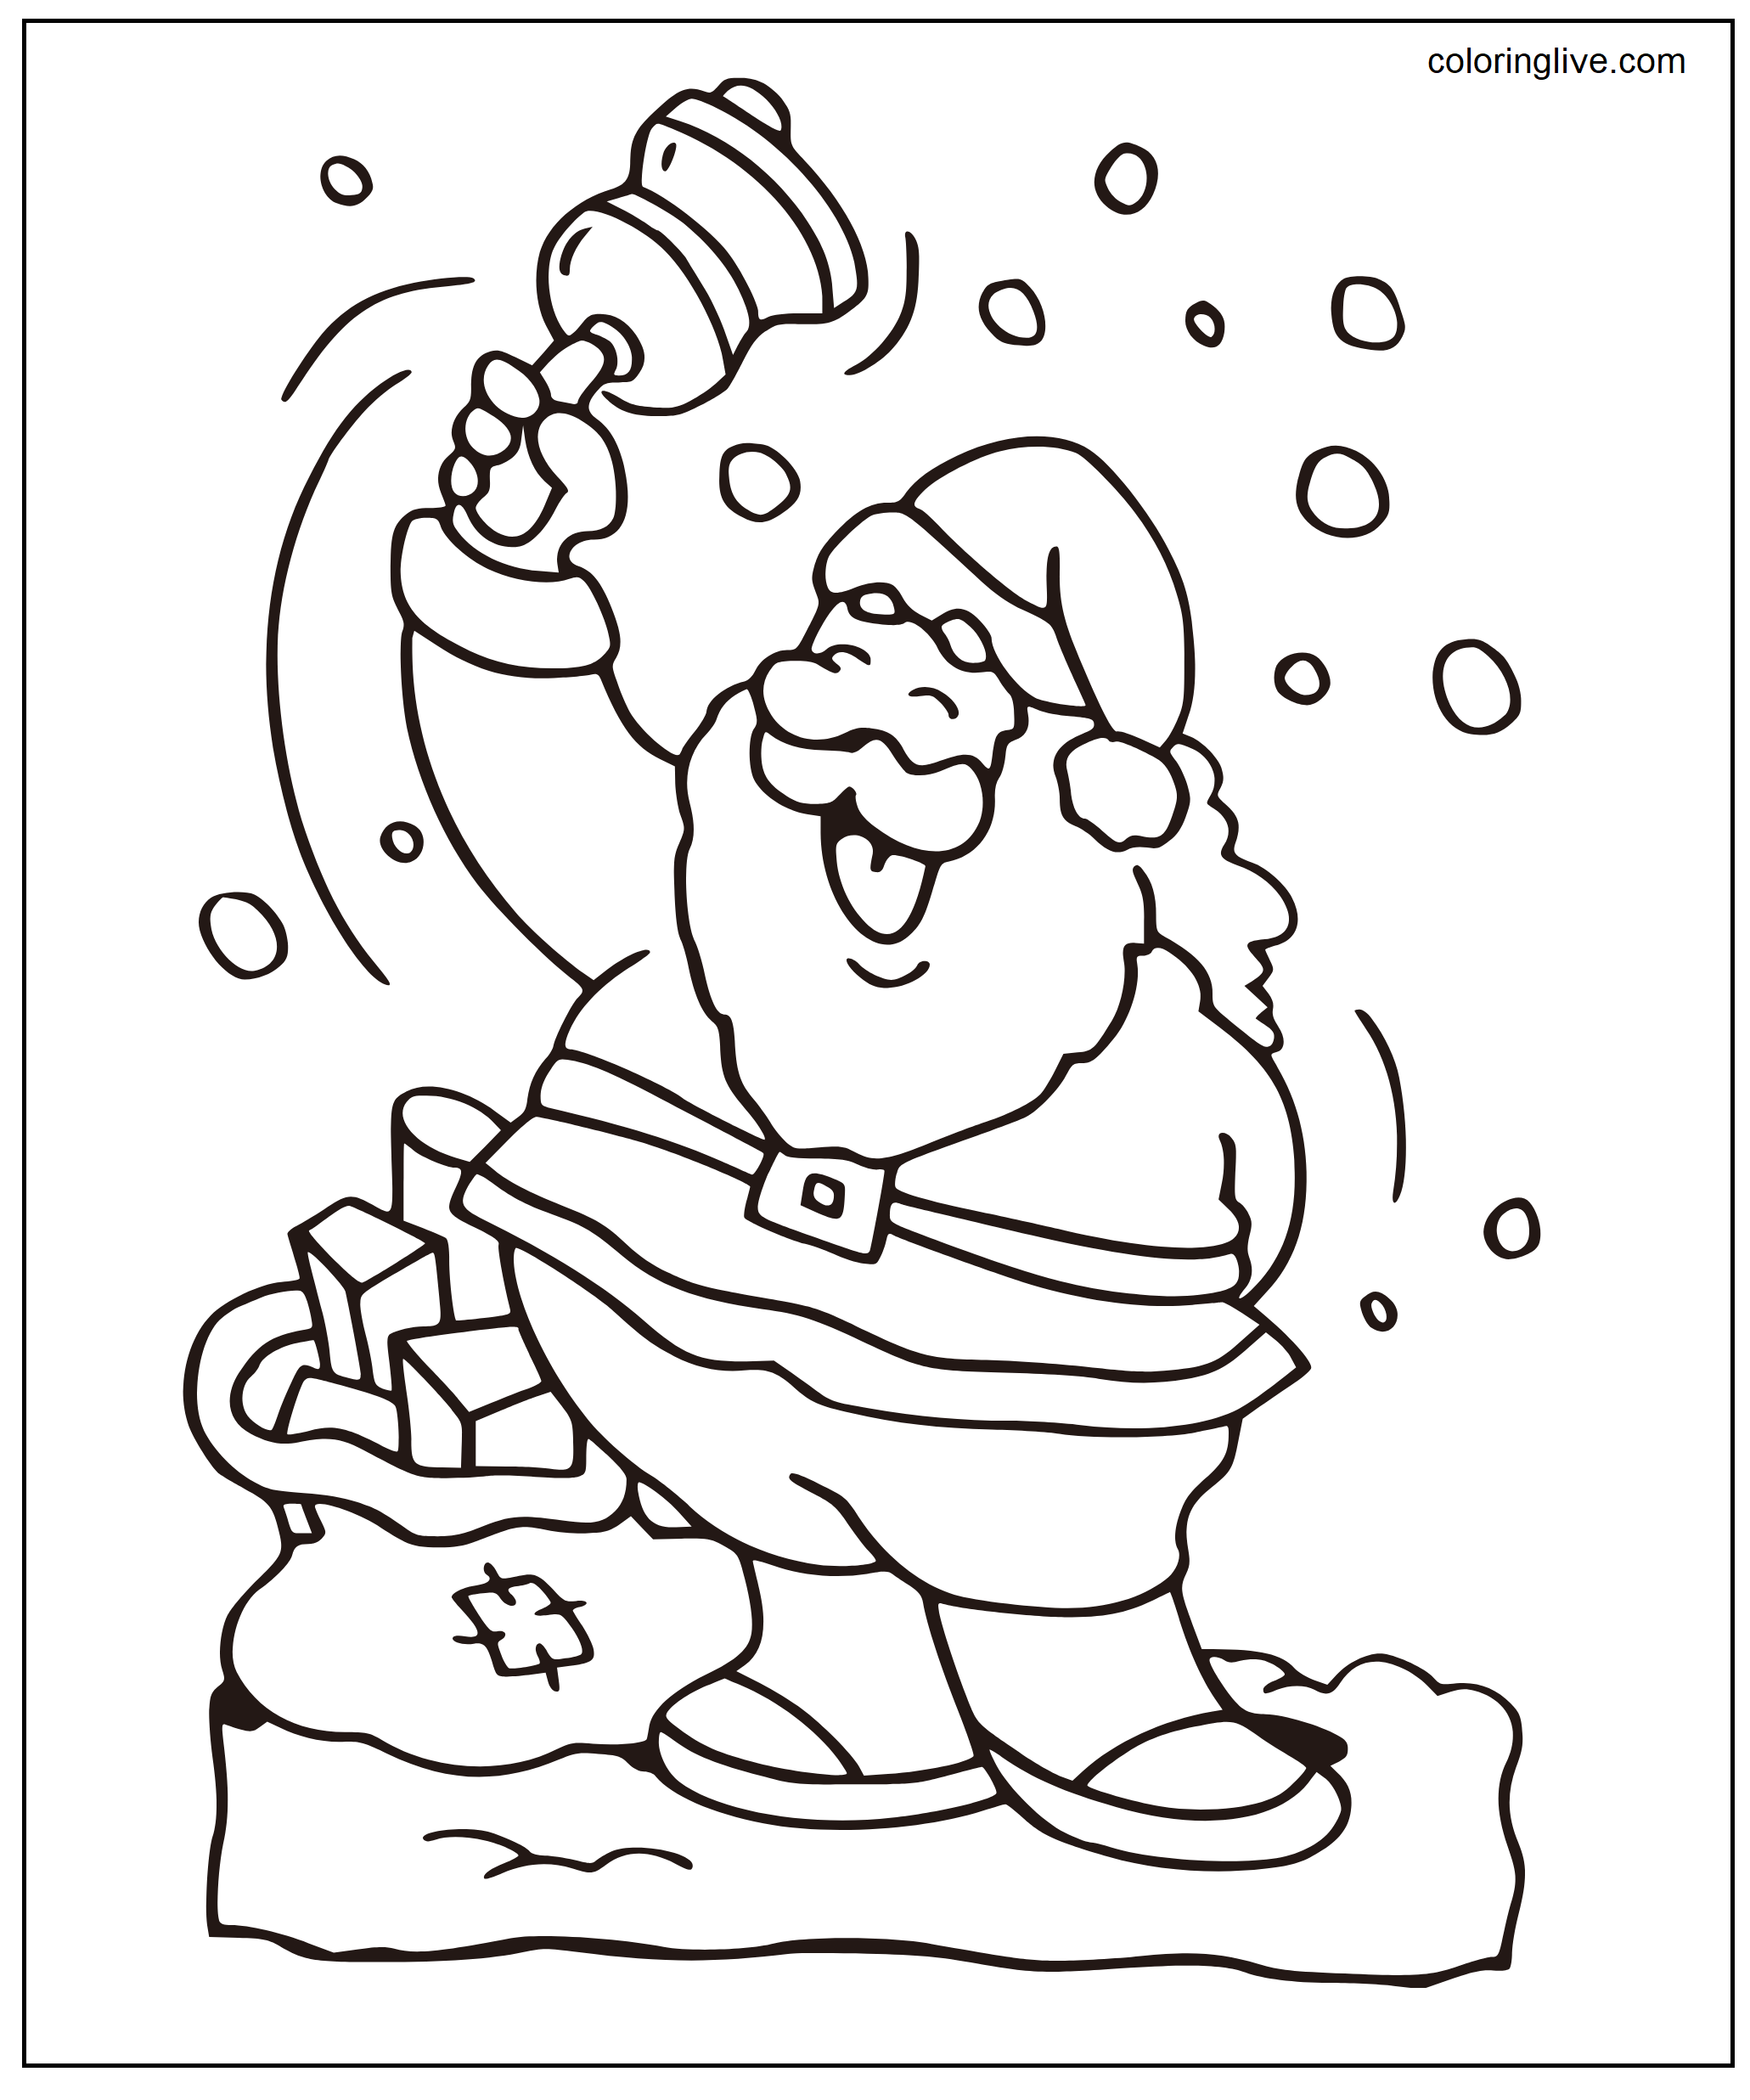 Printable Santa ringing bell  sheet Coloring Page for kids.